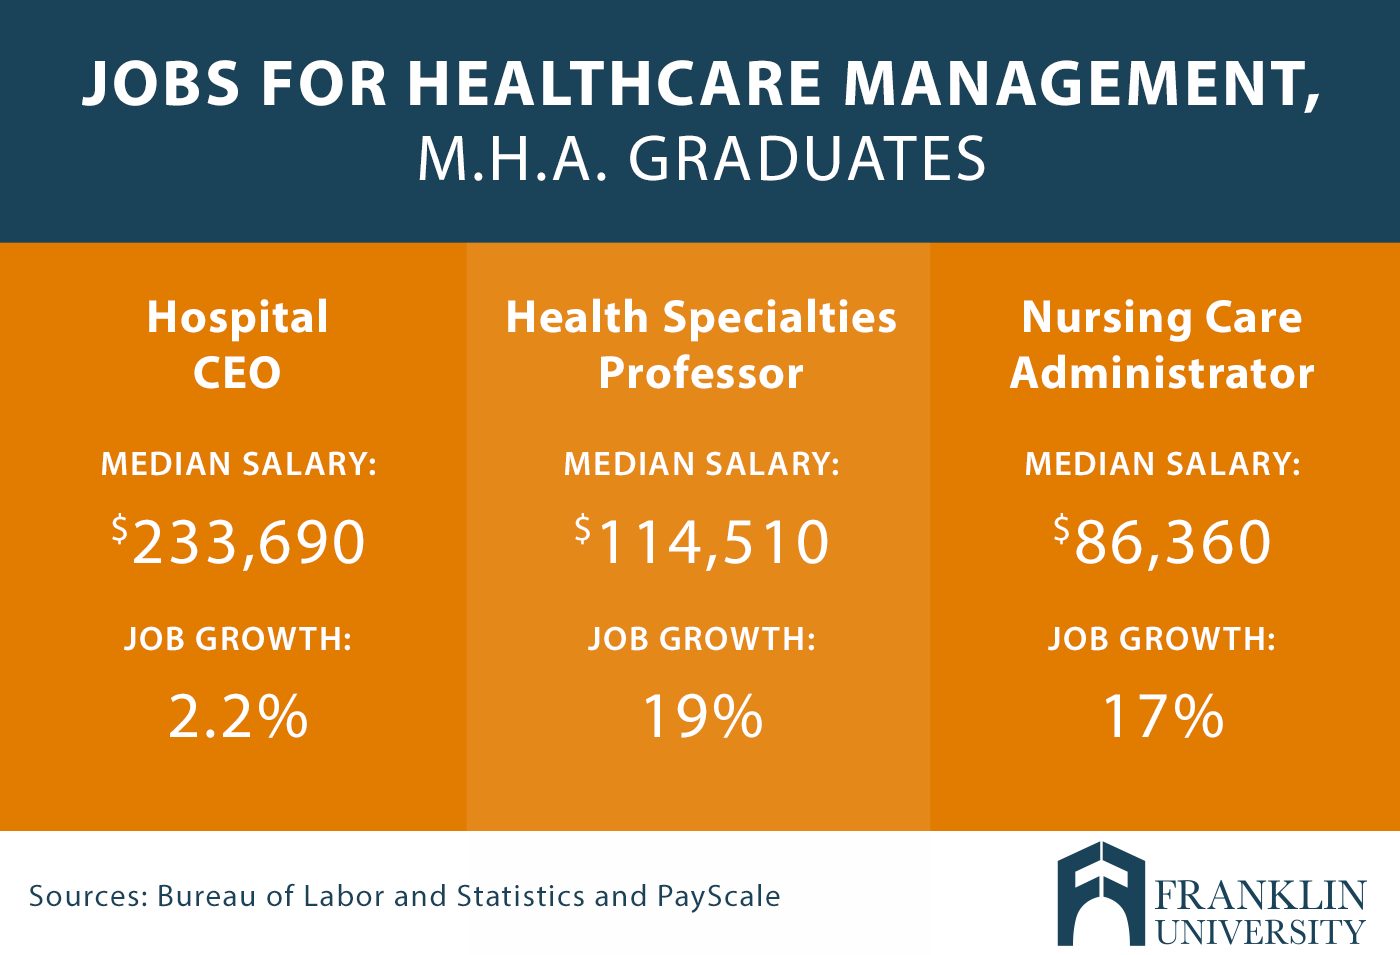 graphic describes jobs for healthcare management, M.H.A graduates